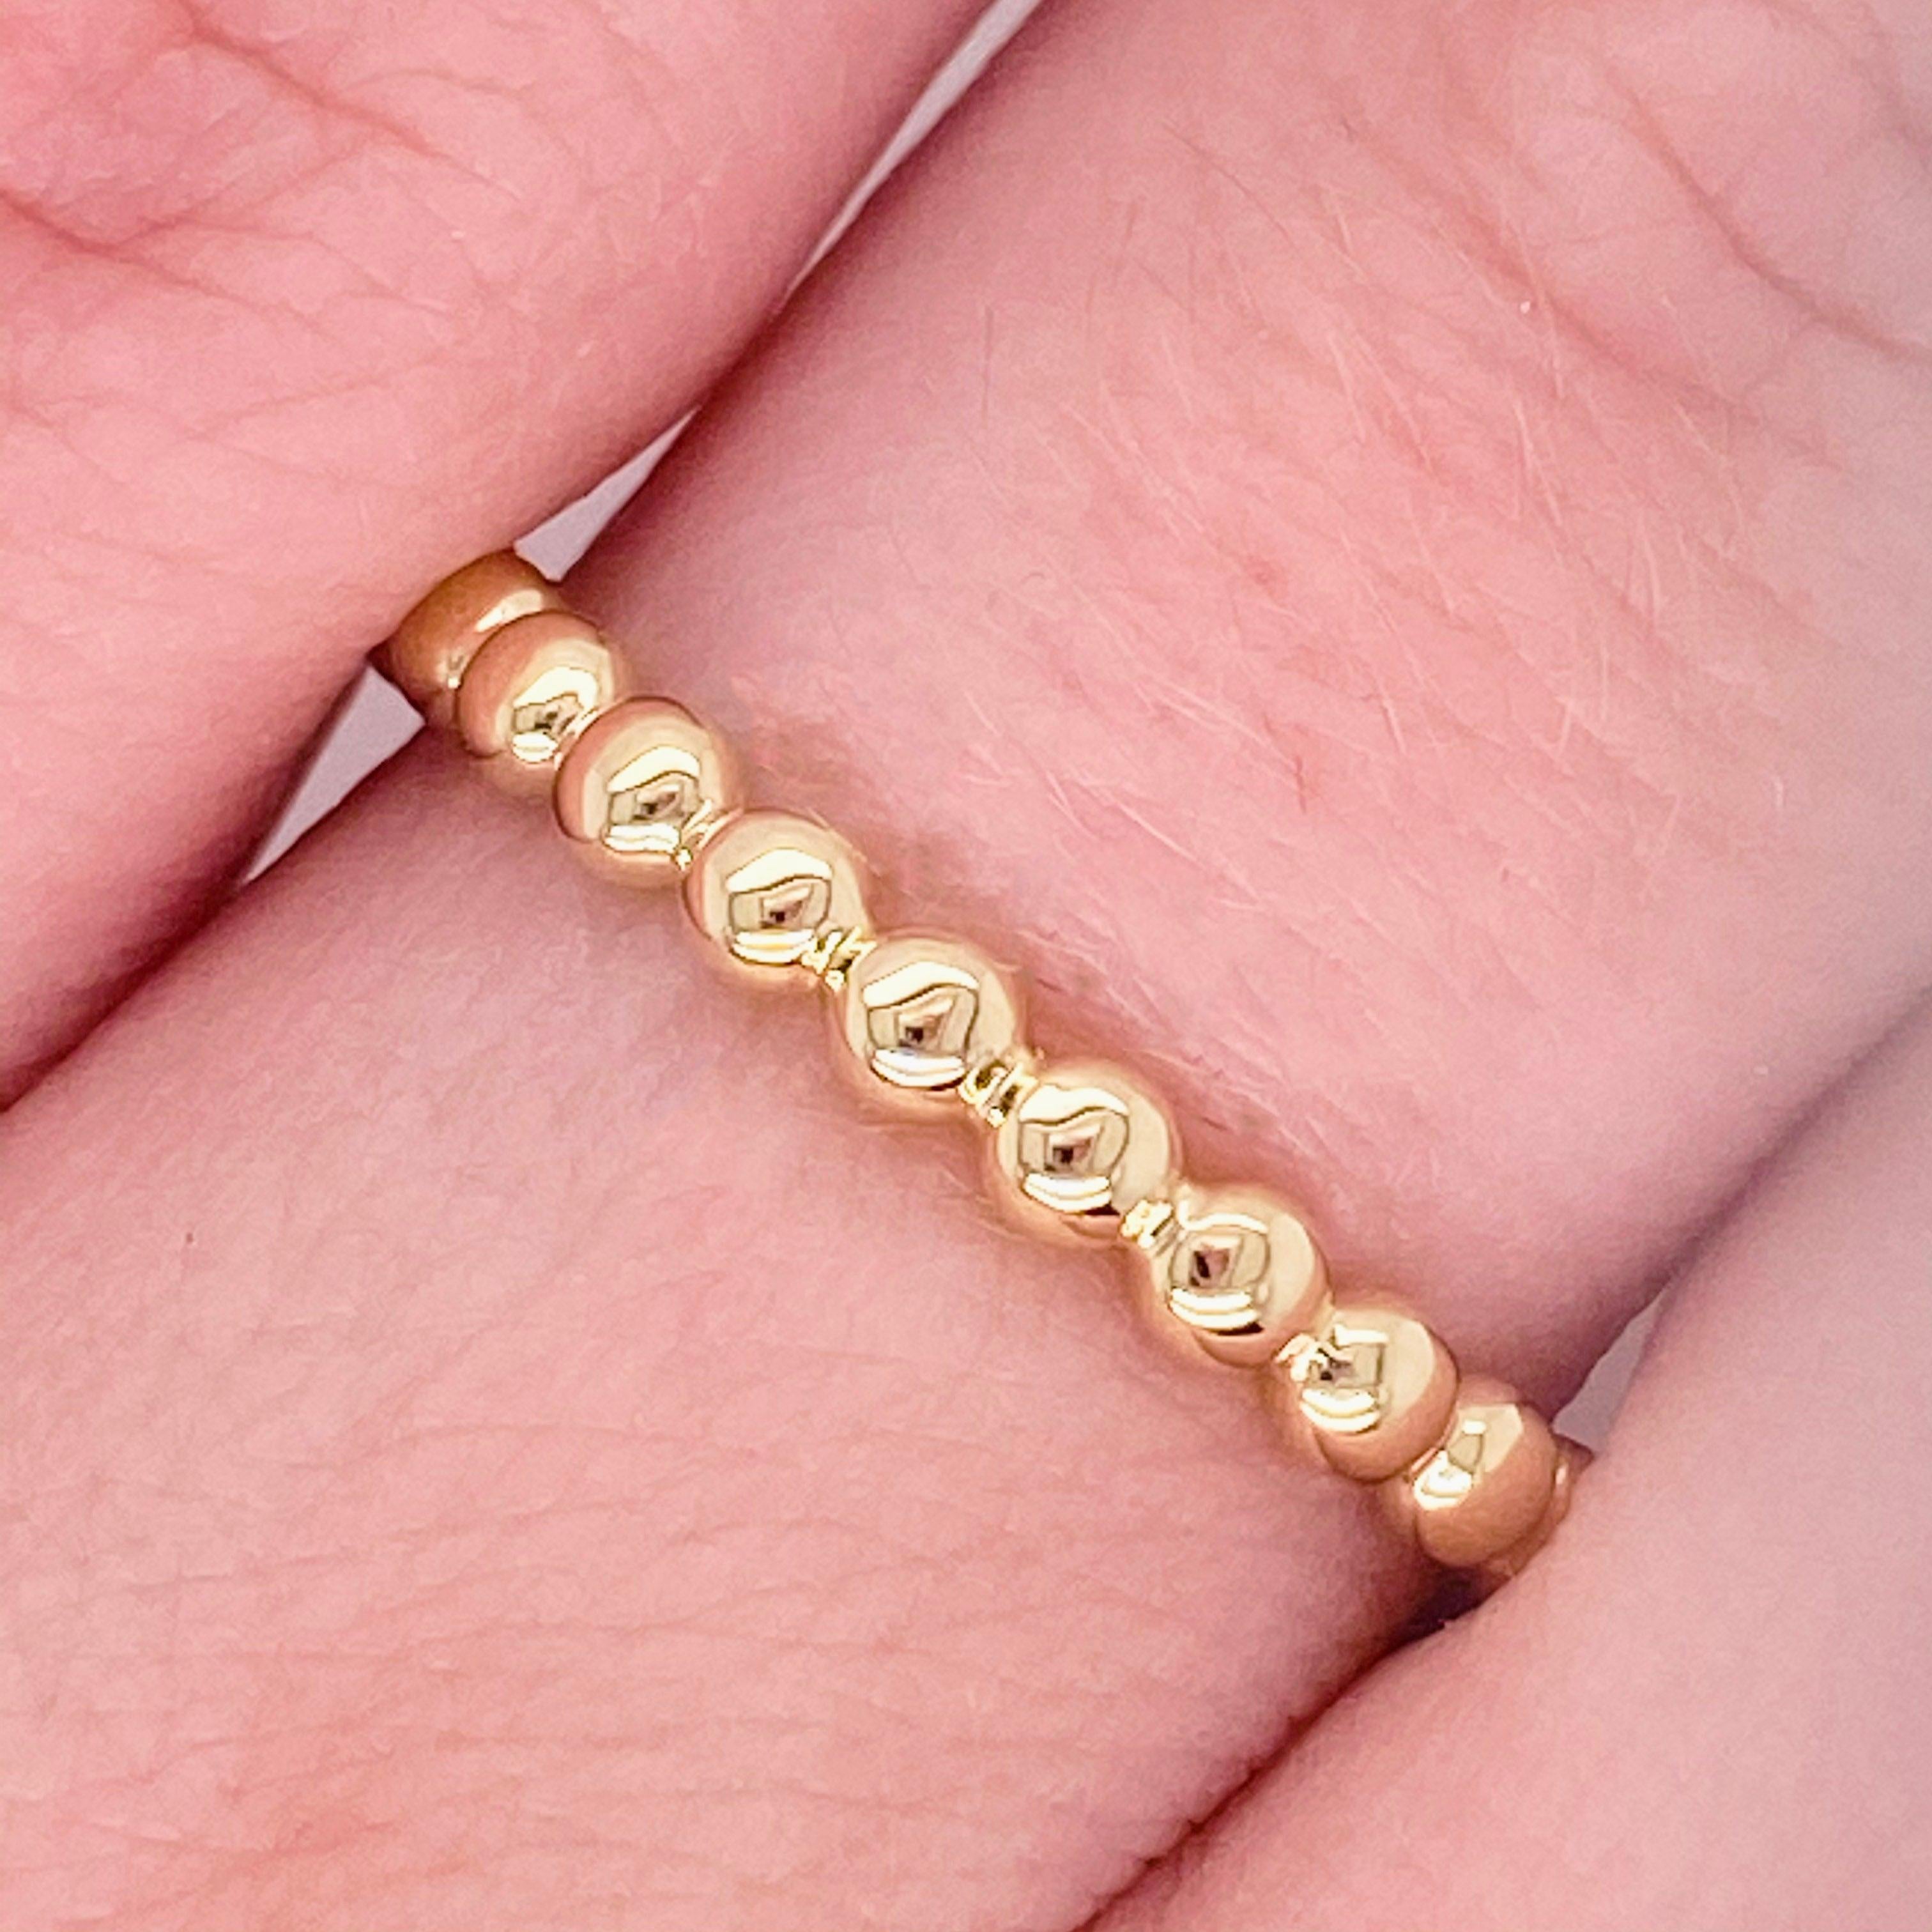 Im Angebot: Goldperlenring, 14 Karat Gelbgold Perlenring, stapelbarer Ring, 2021 Echt () 2